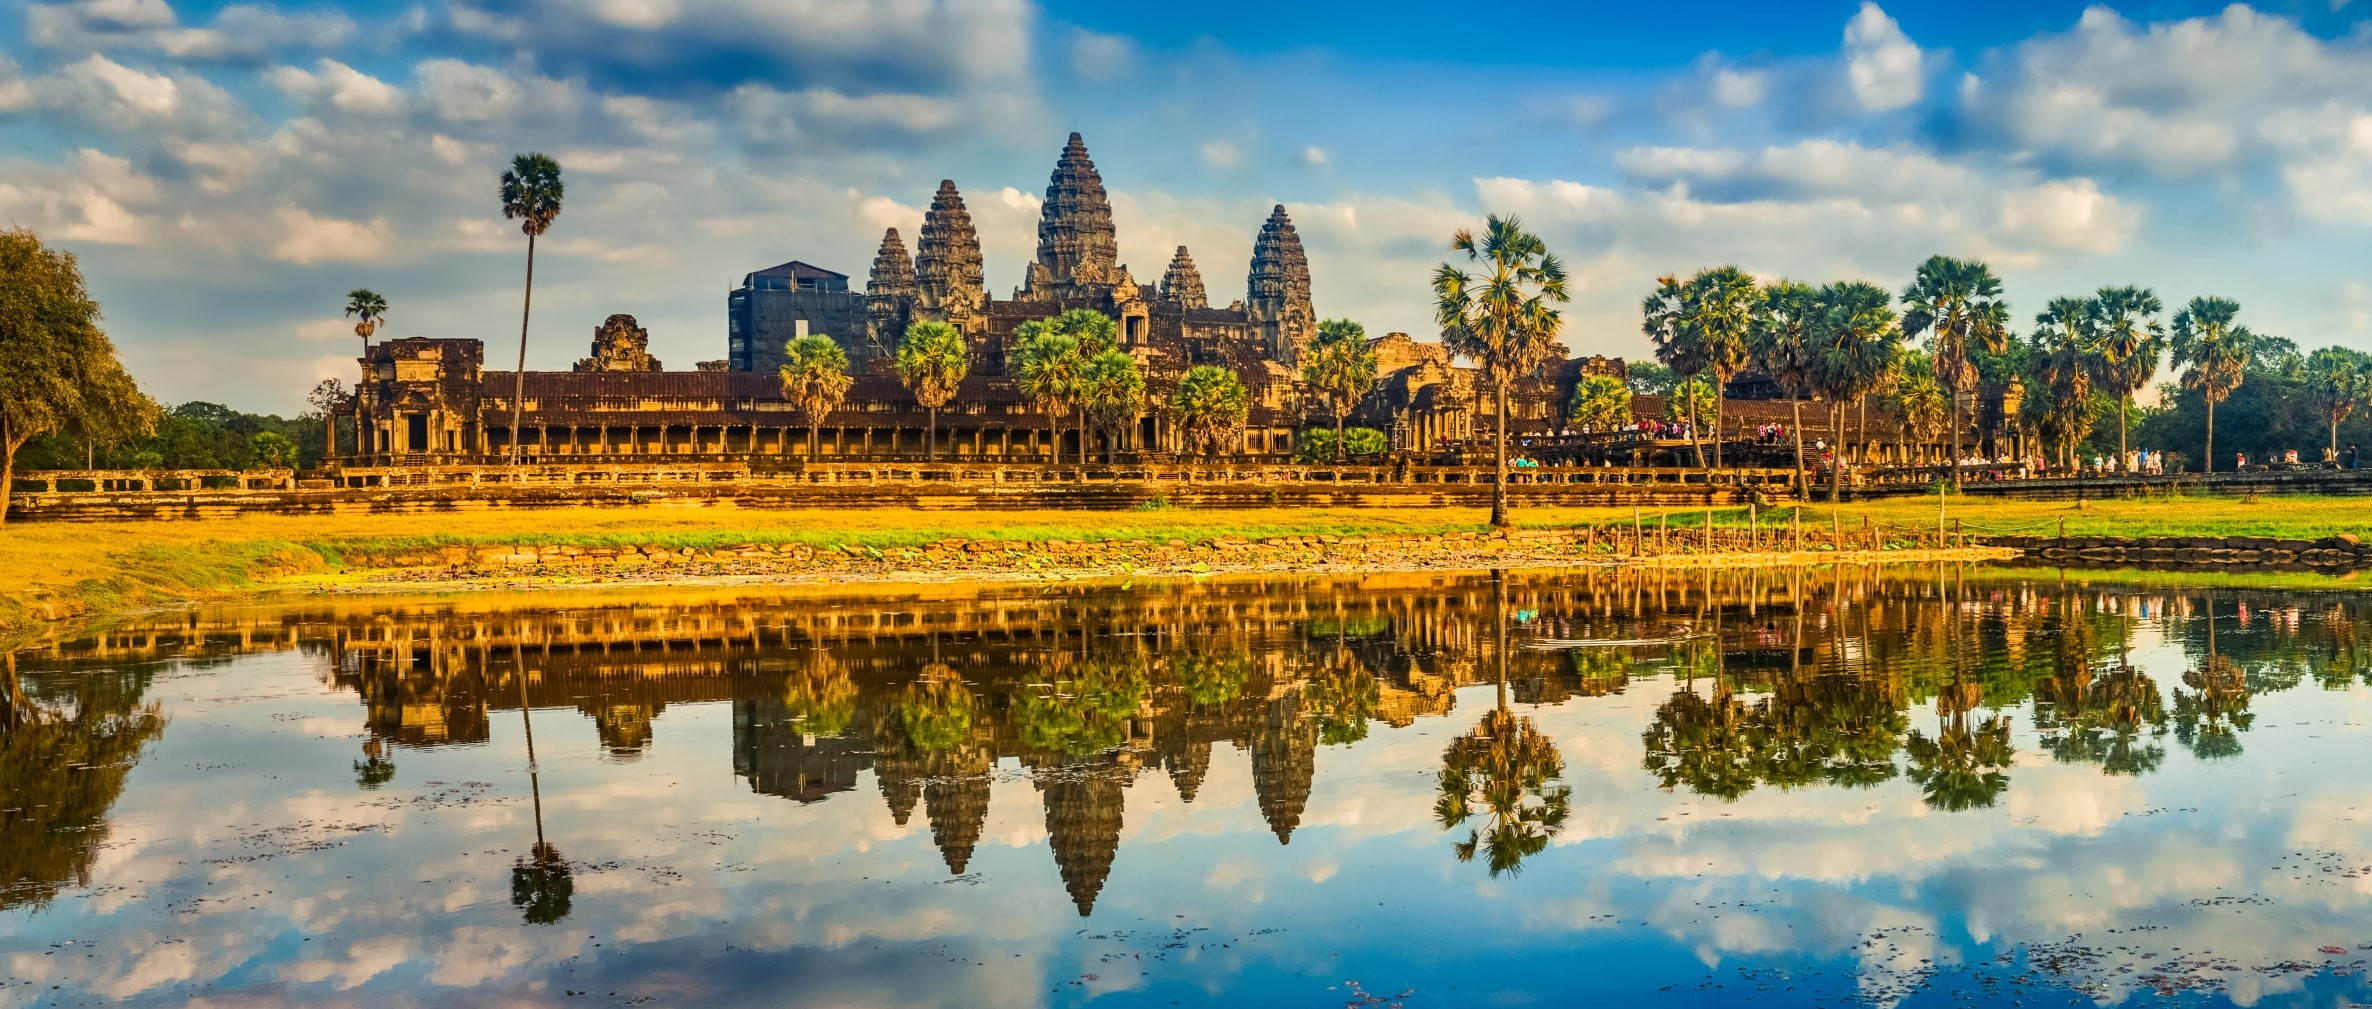 Cambodge - Pano - REP - Site - Temple d'Angkor Vat se reflétant dans l'eau, Unesco - S1322309114 - xTAS - xCIV